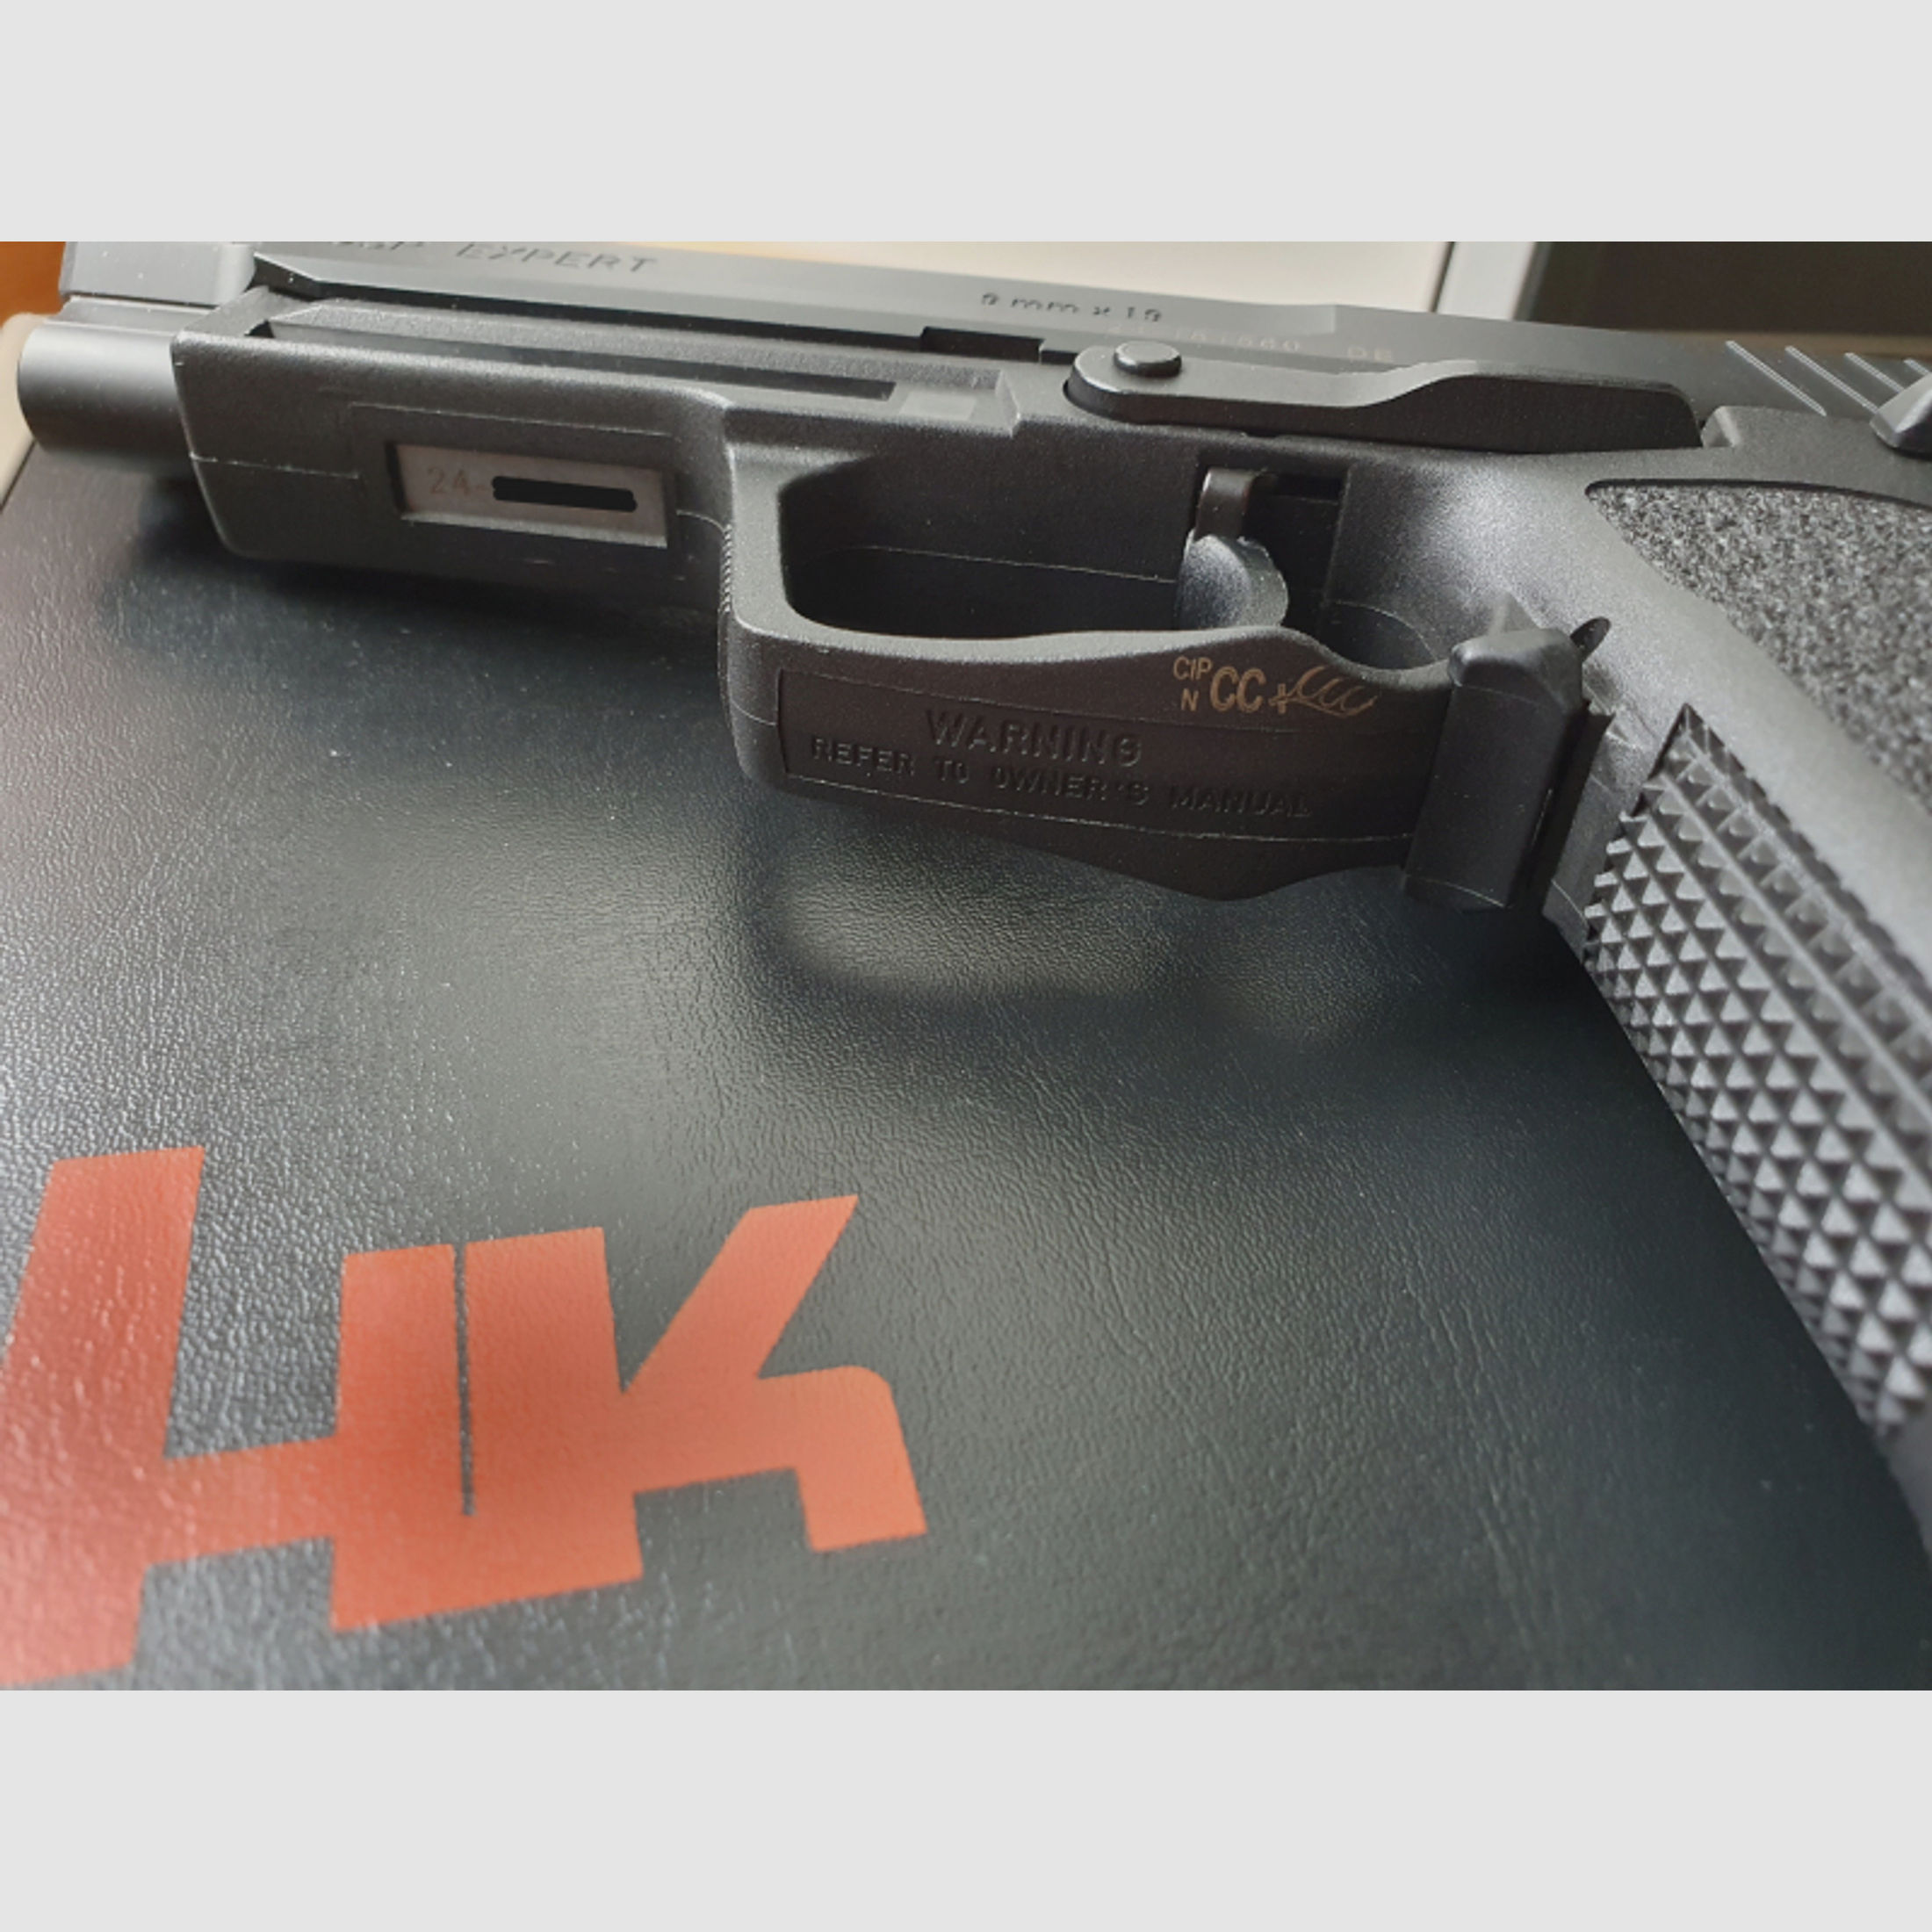 Heckler & Koch USP Expert 9mm HK H&K